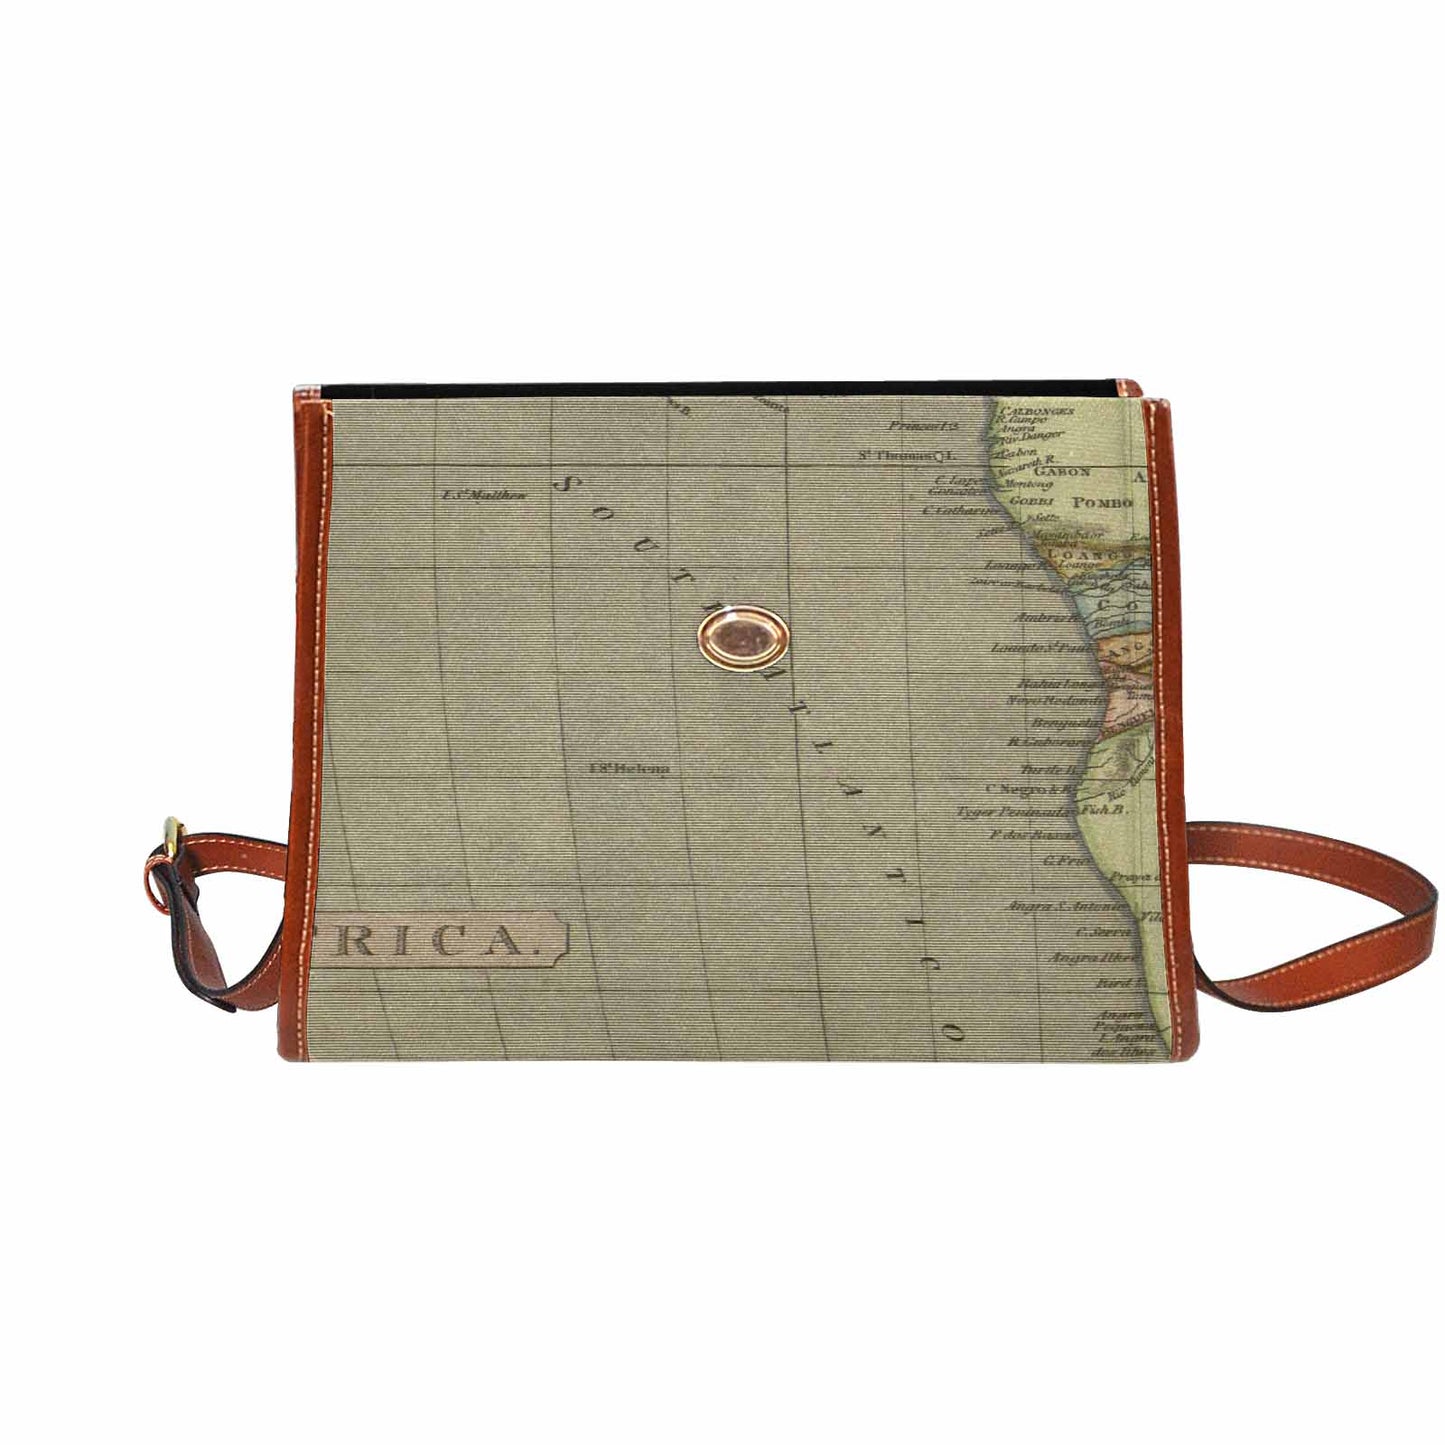 Antique Map Handbag, Model 1695341, Design 04